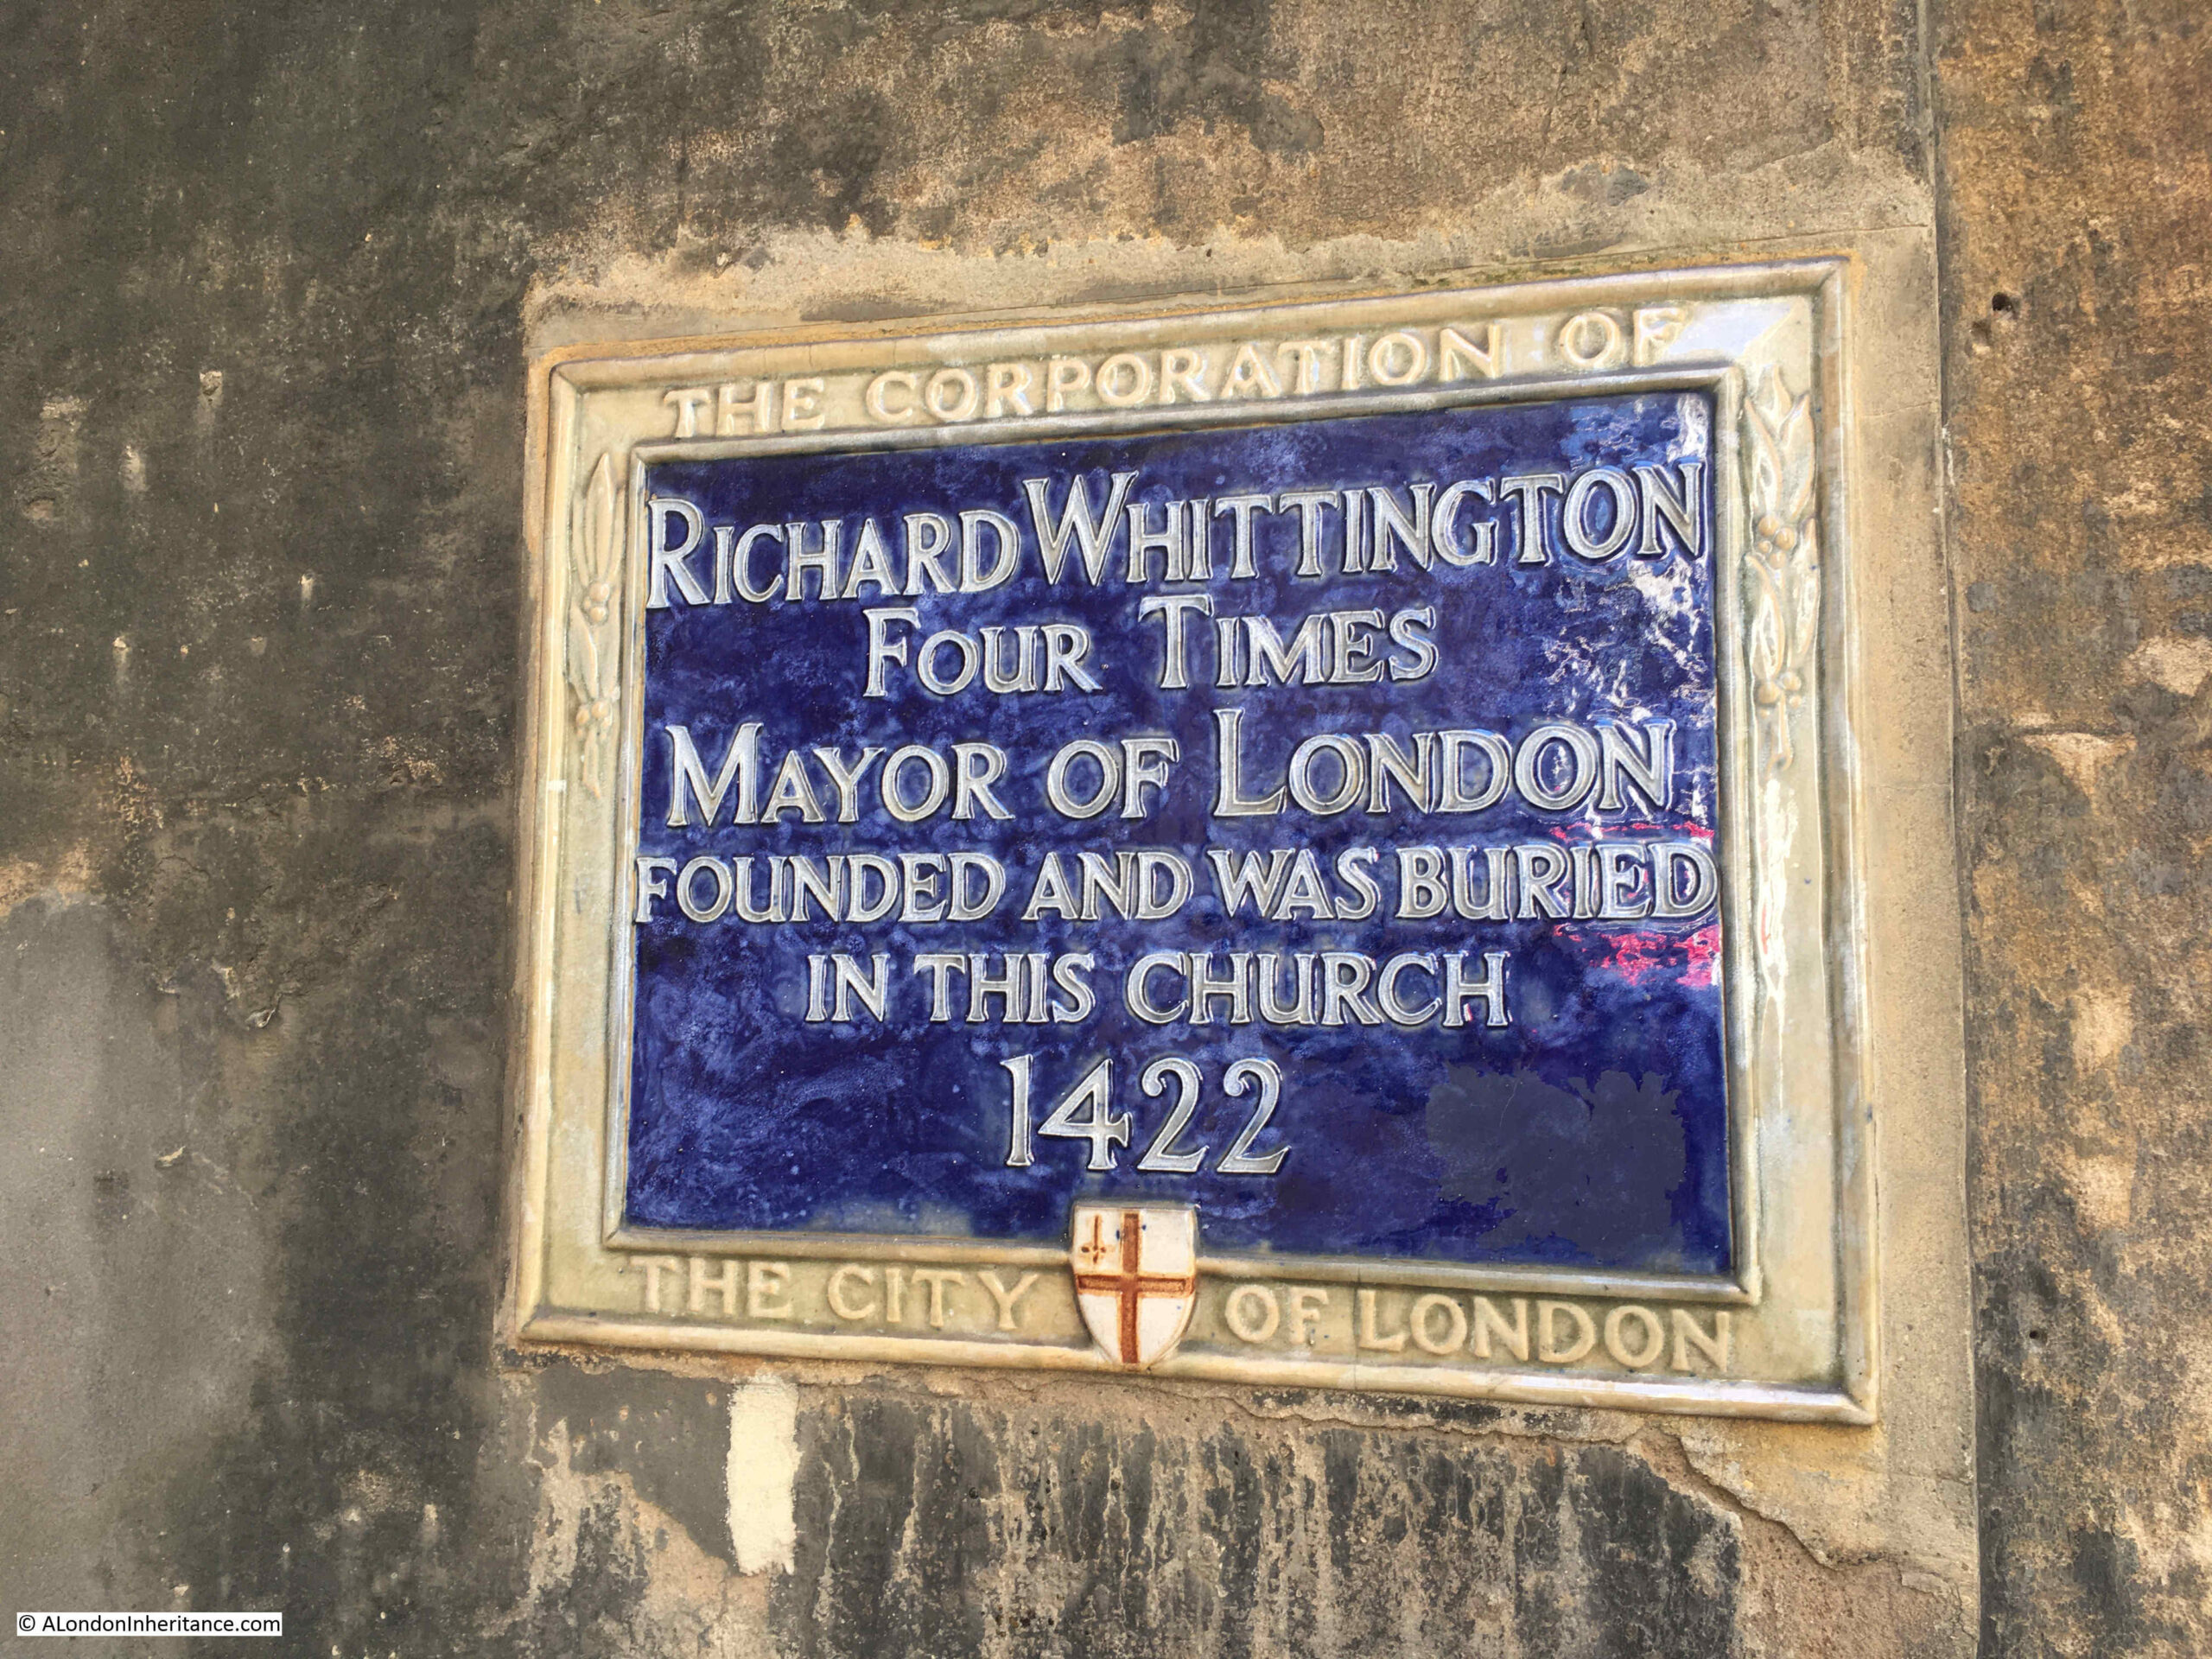 Richard Whittington